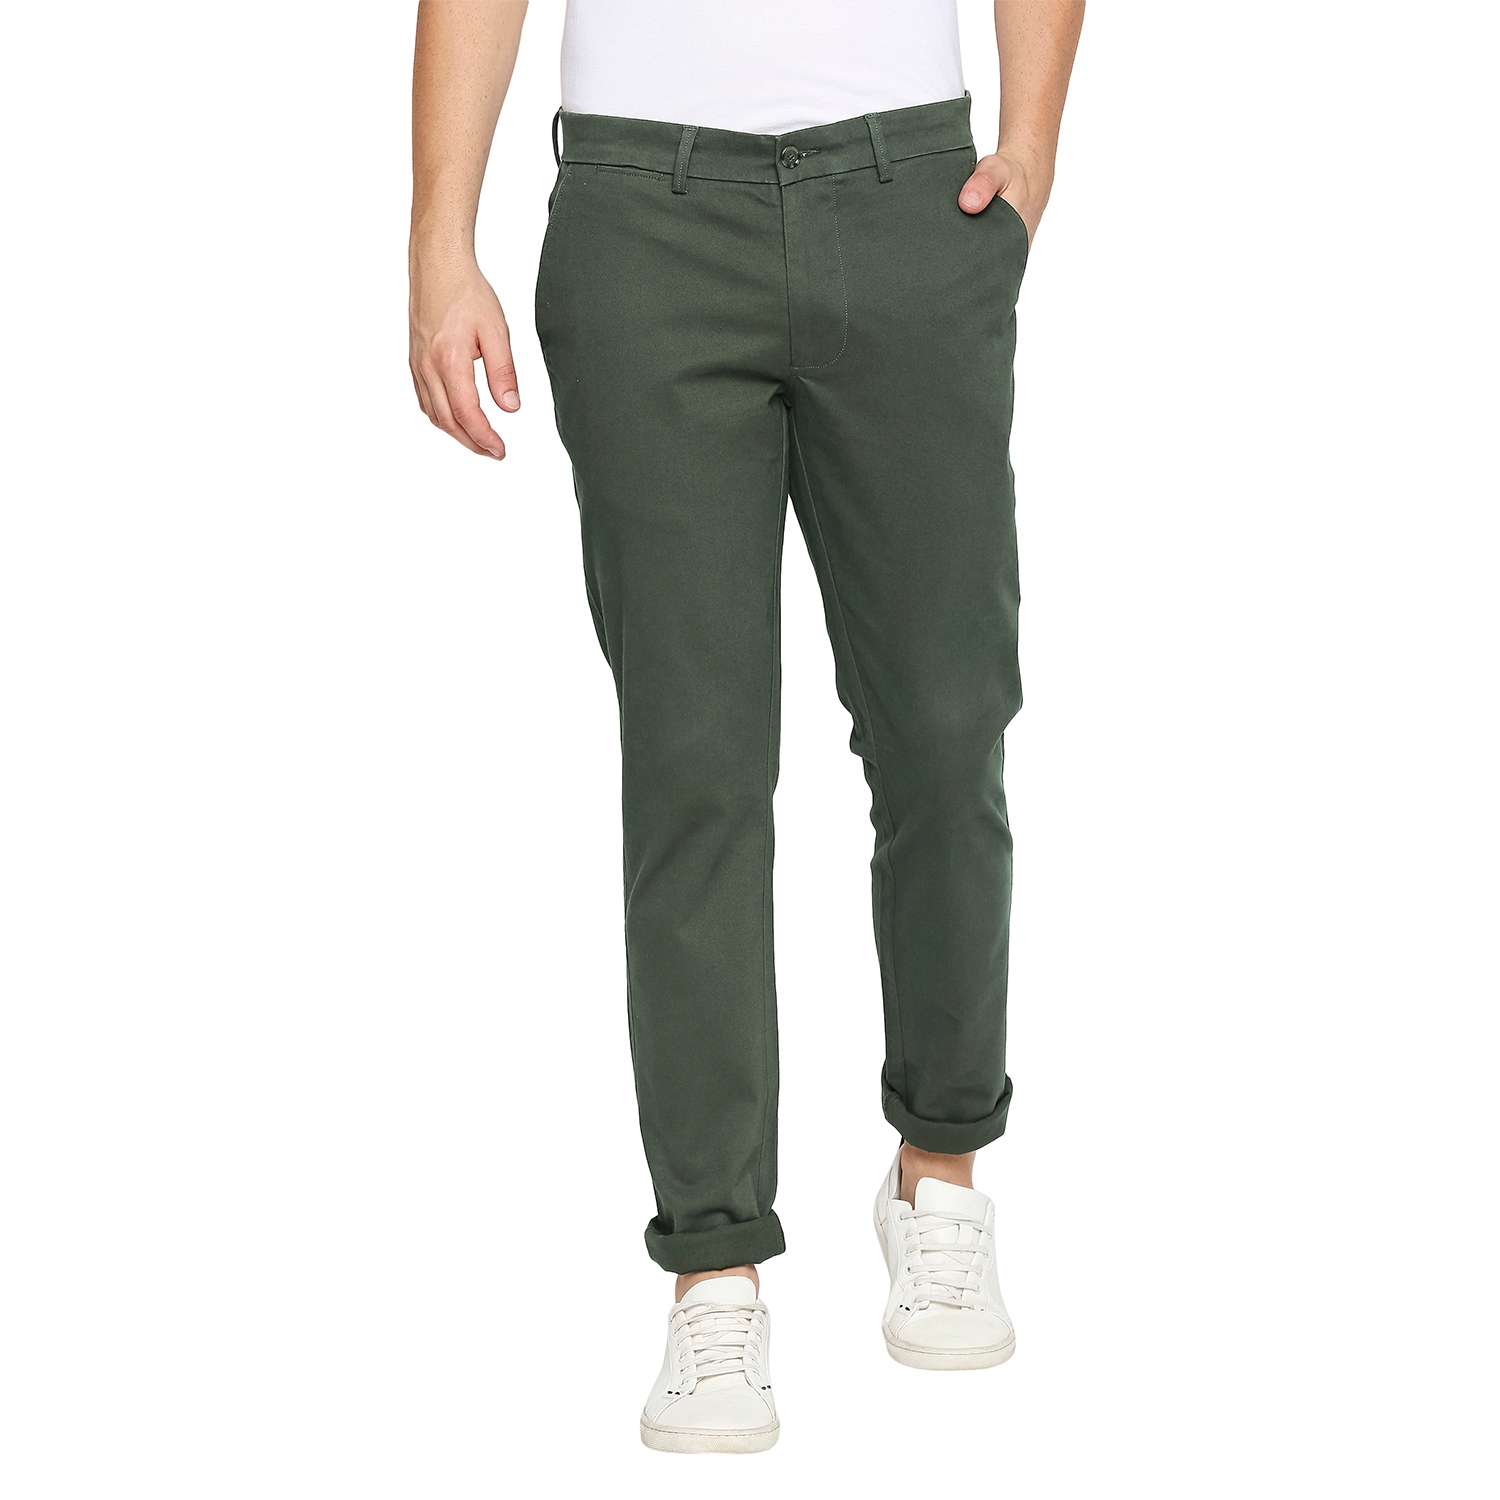 Basics | Men's Olive Cotton Blend Solid Trouser 0